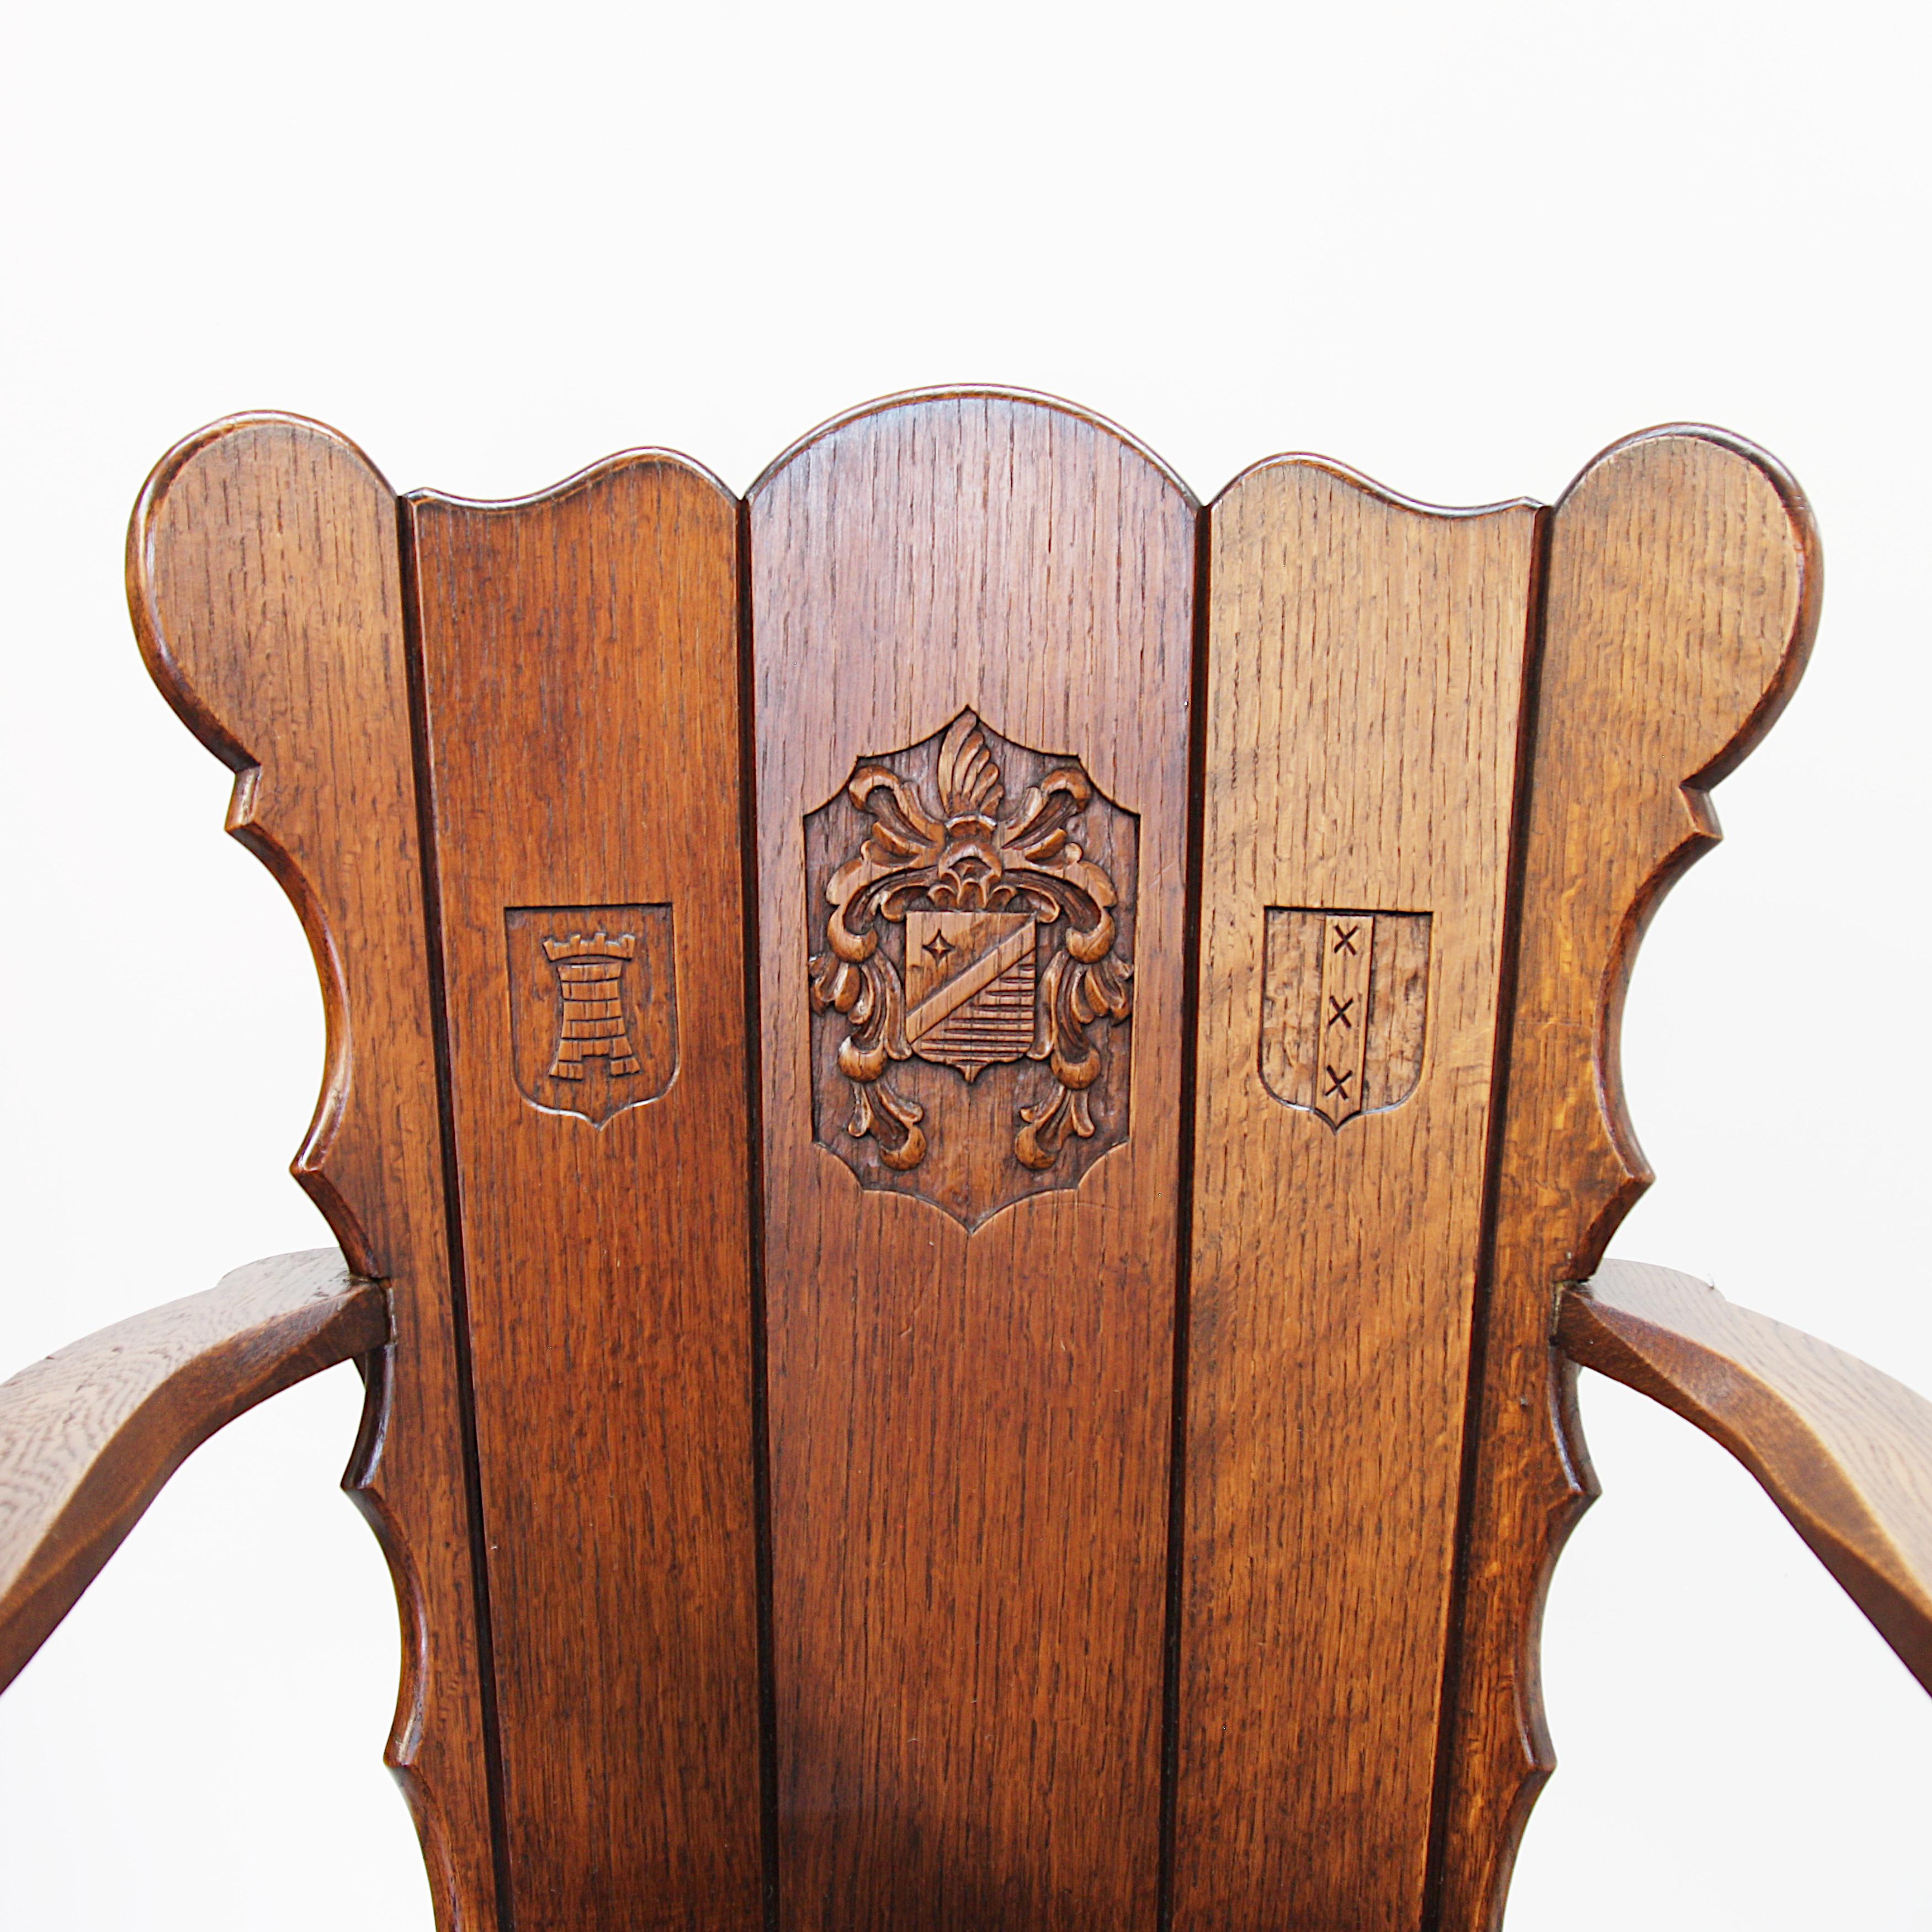 20th Century Vintage Dutch Medieval Revival Heraldic Coat of Arms Oak Lodge Arm Chair